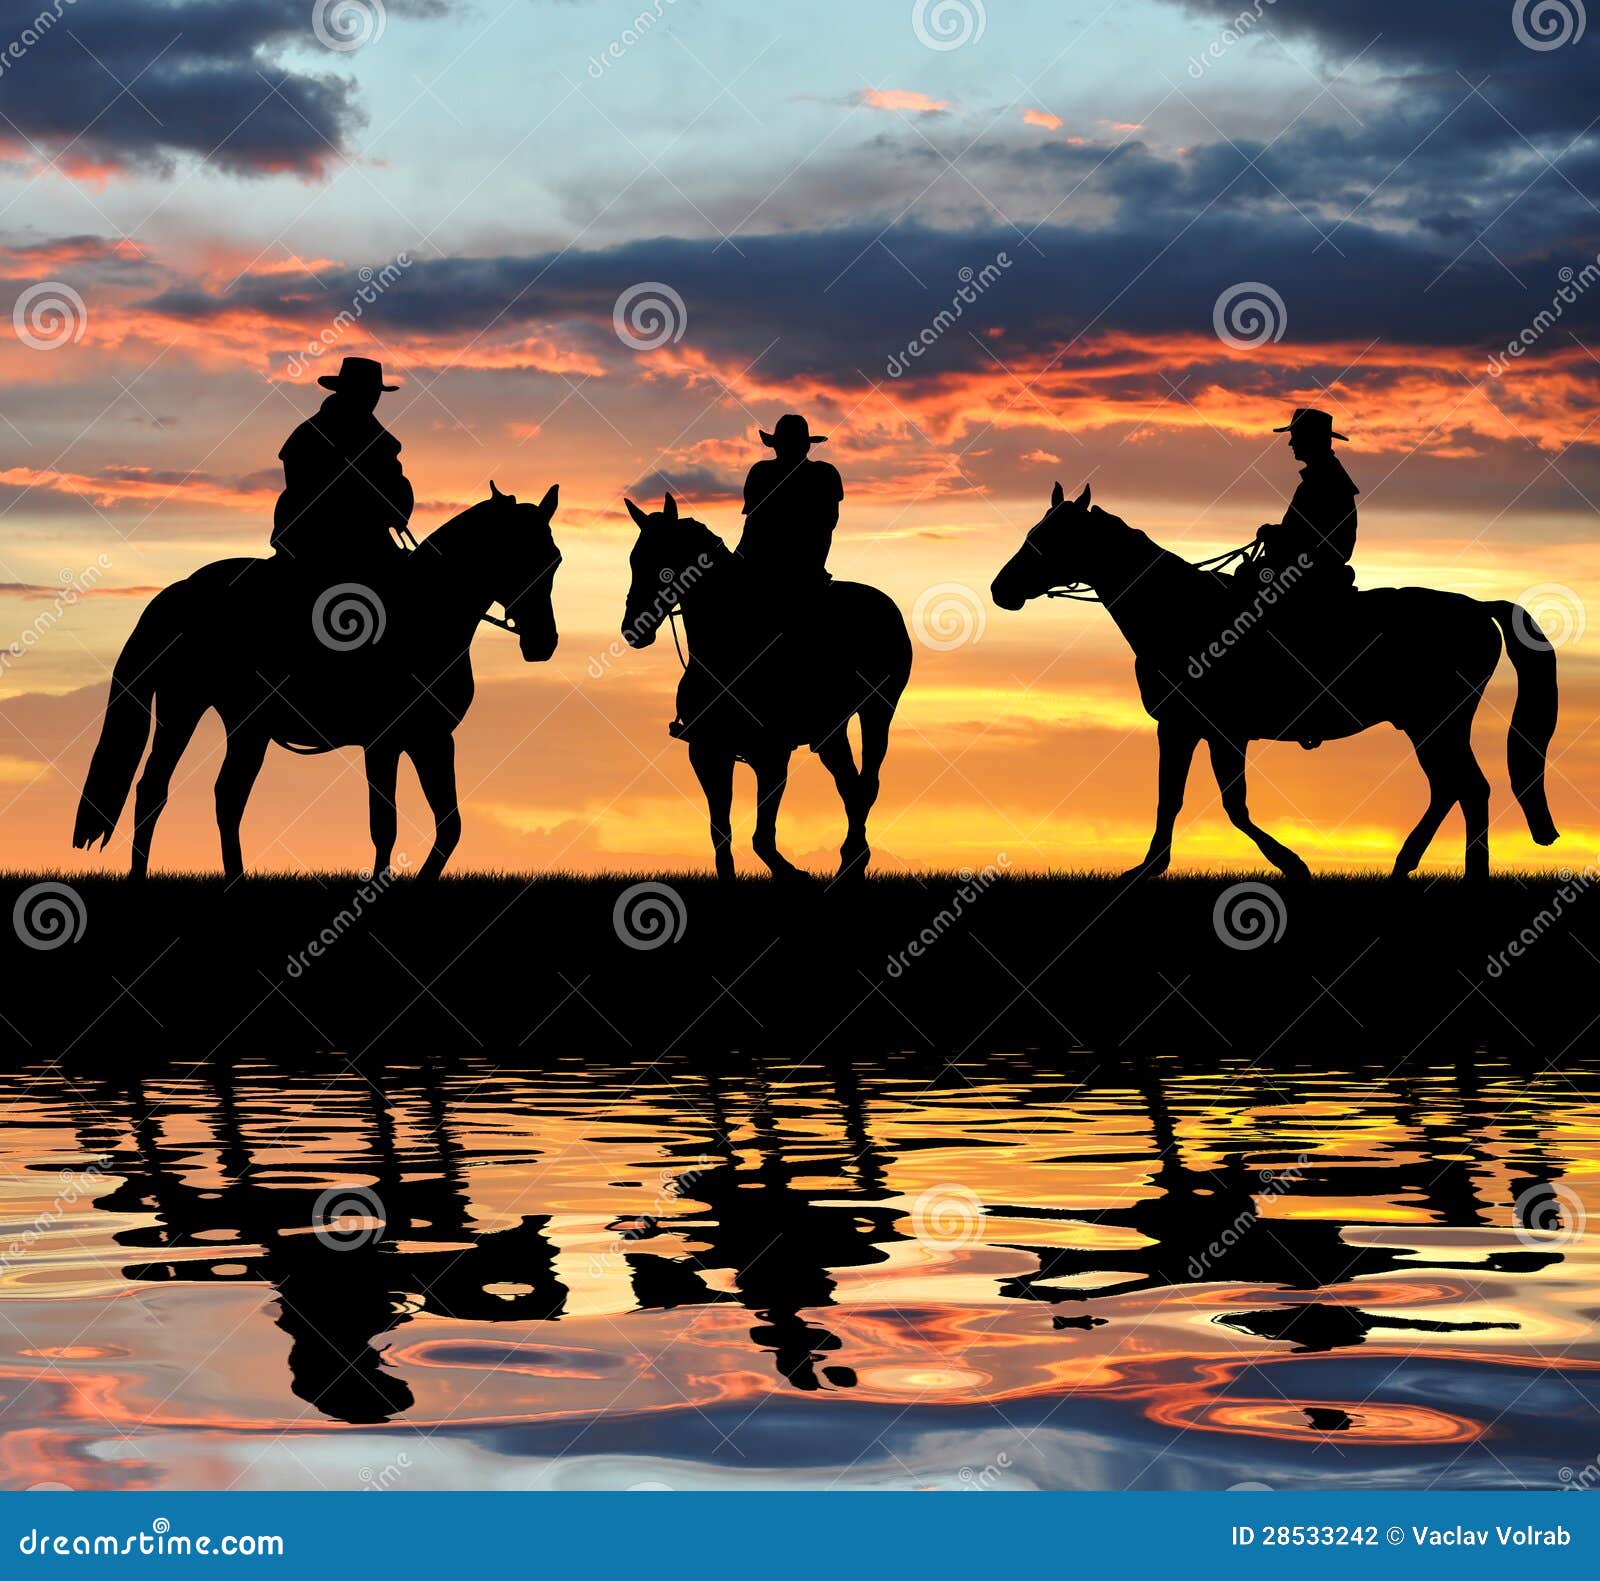 silhouette cowboys